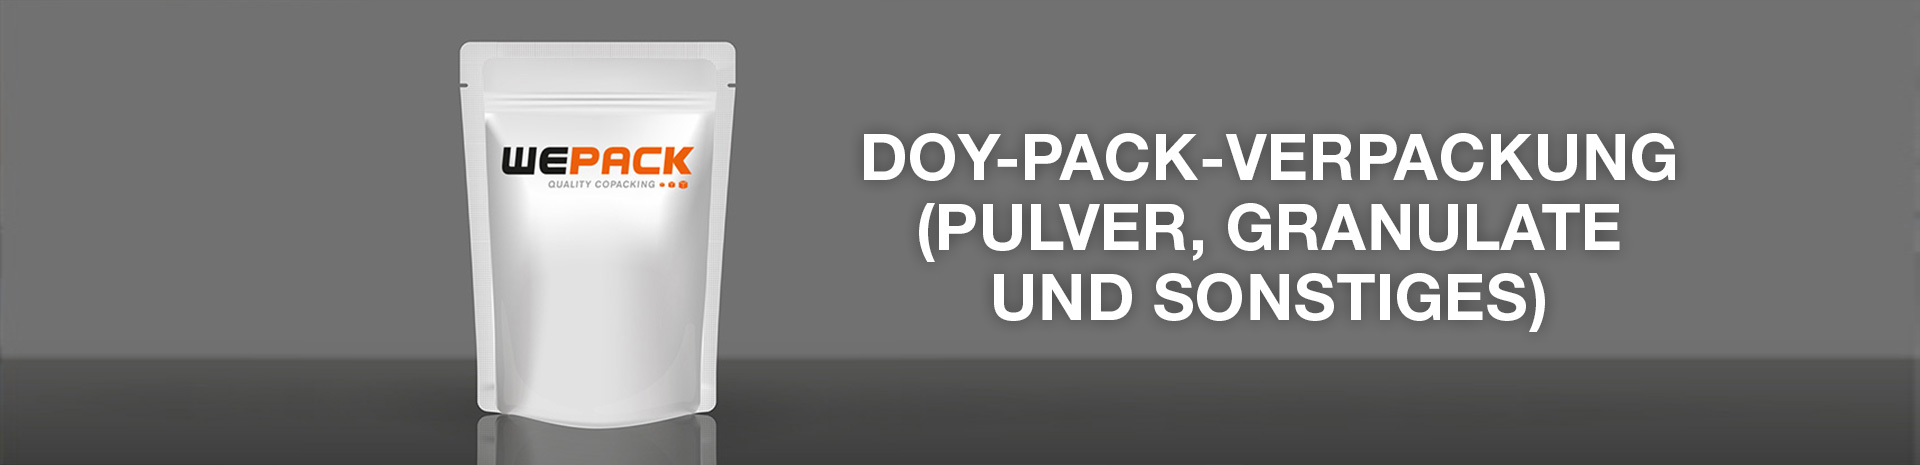 DOY-PACK-Verpackung (Pulver, Granulate und sonstiges)